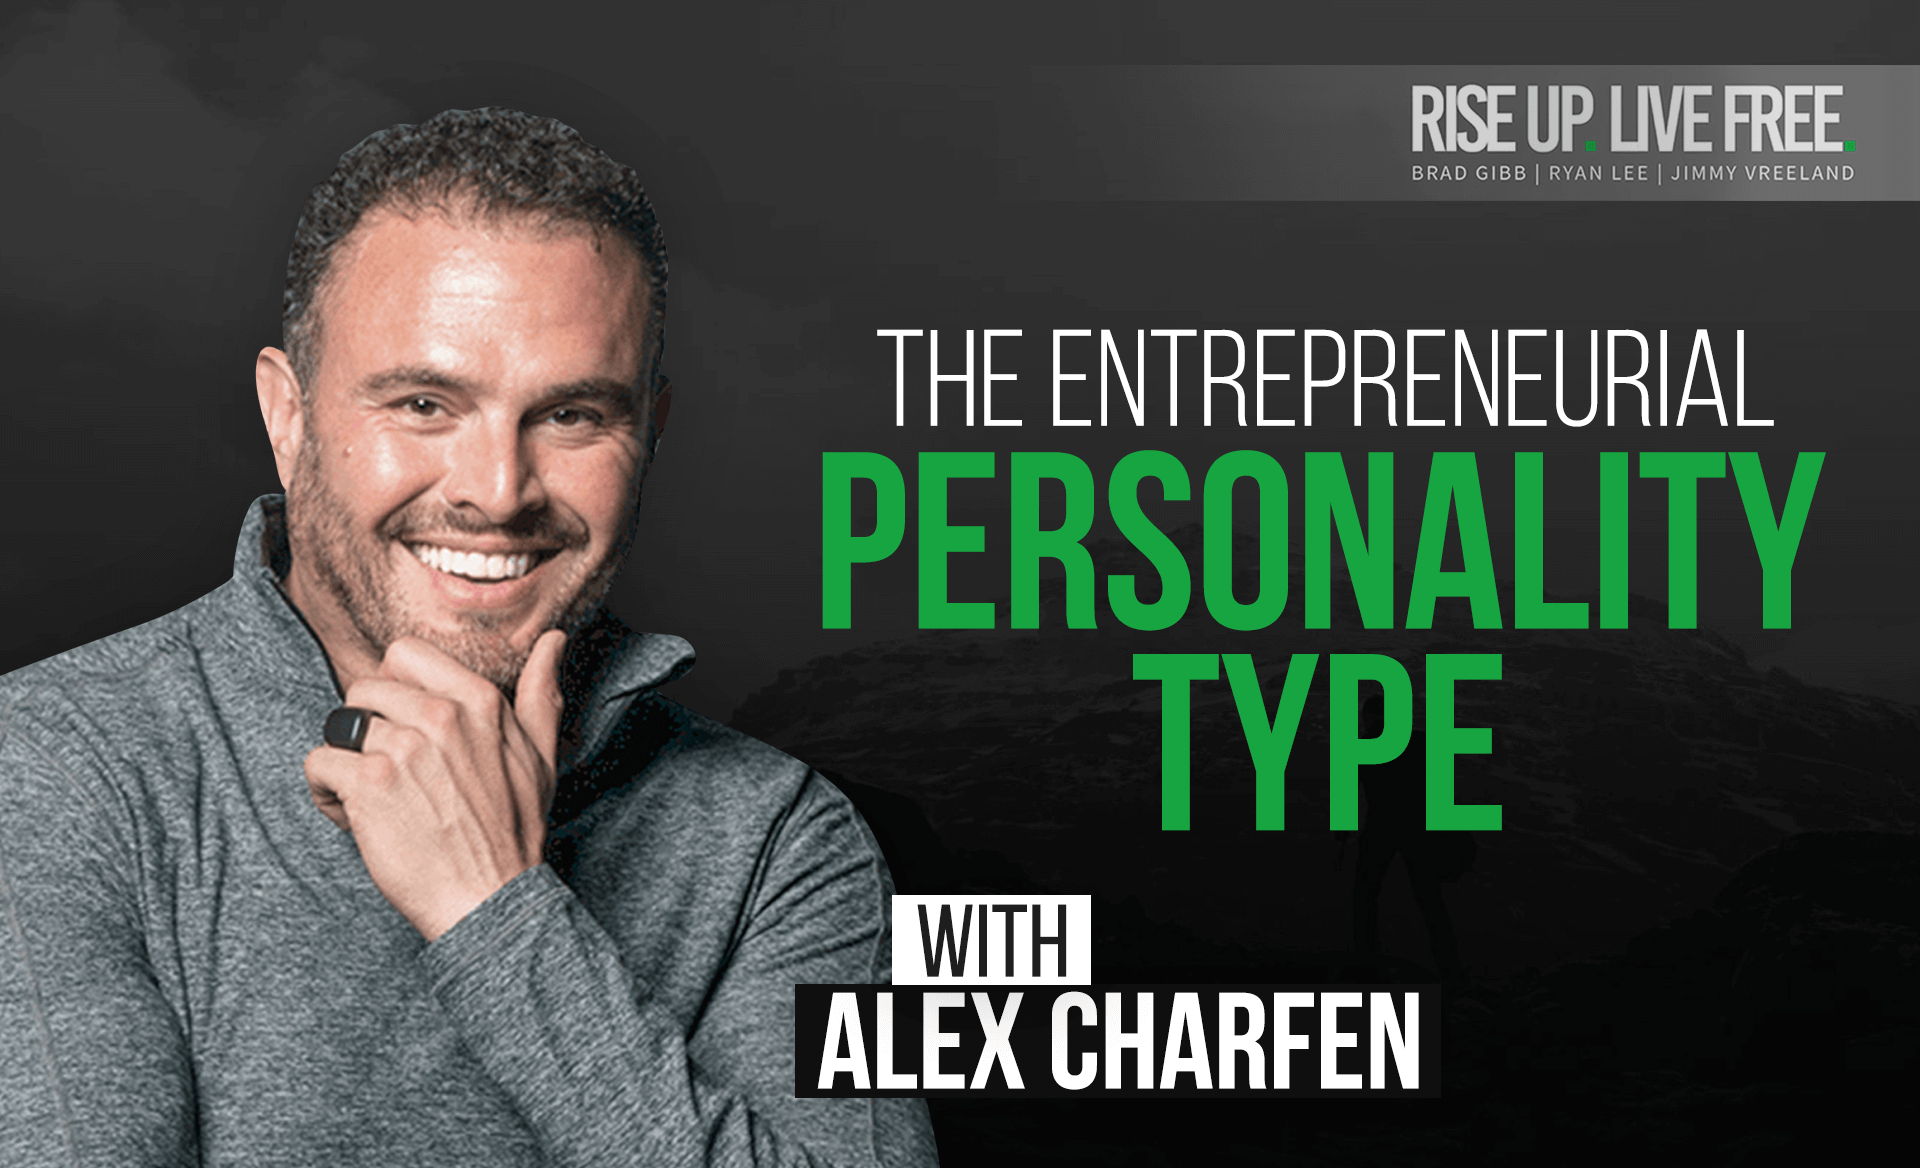 The entrepreneur personality type